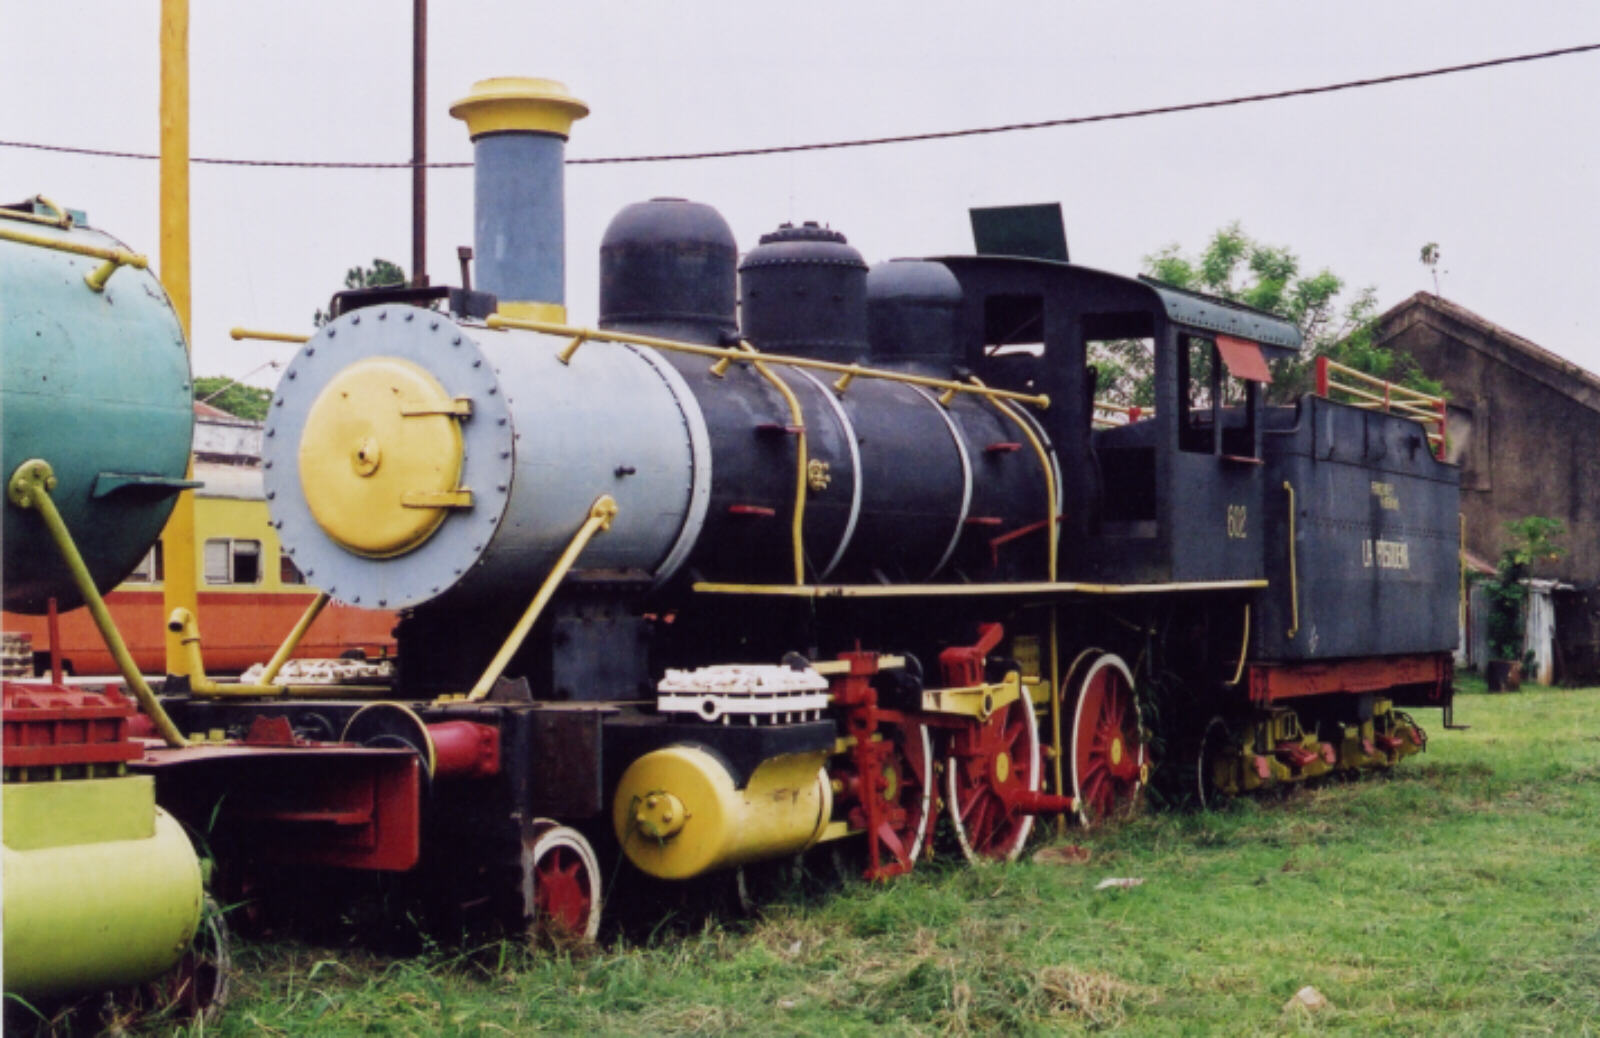 Abandoned steam train in Posadas station, Argentina